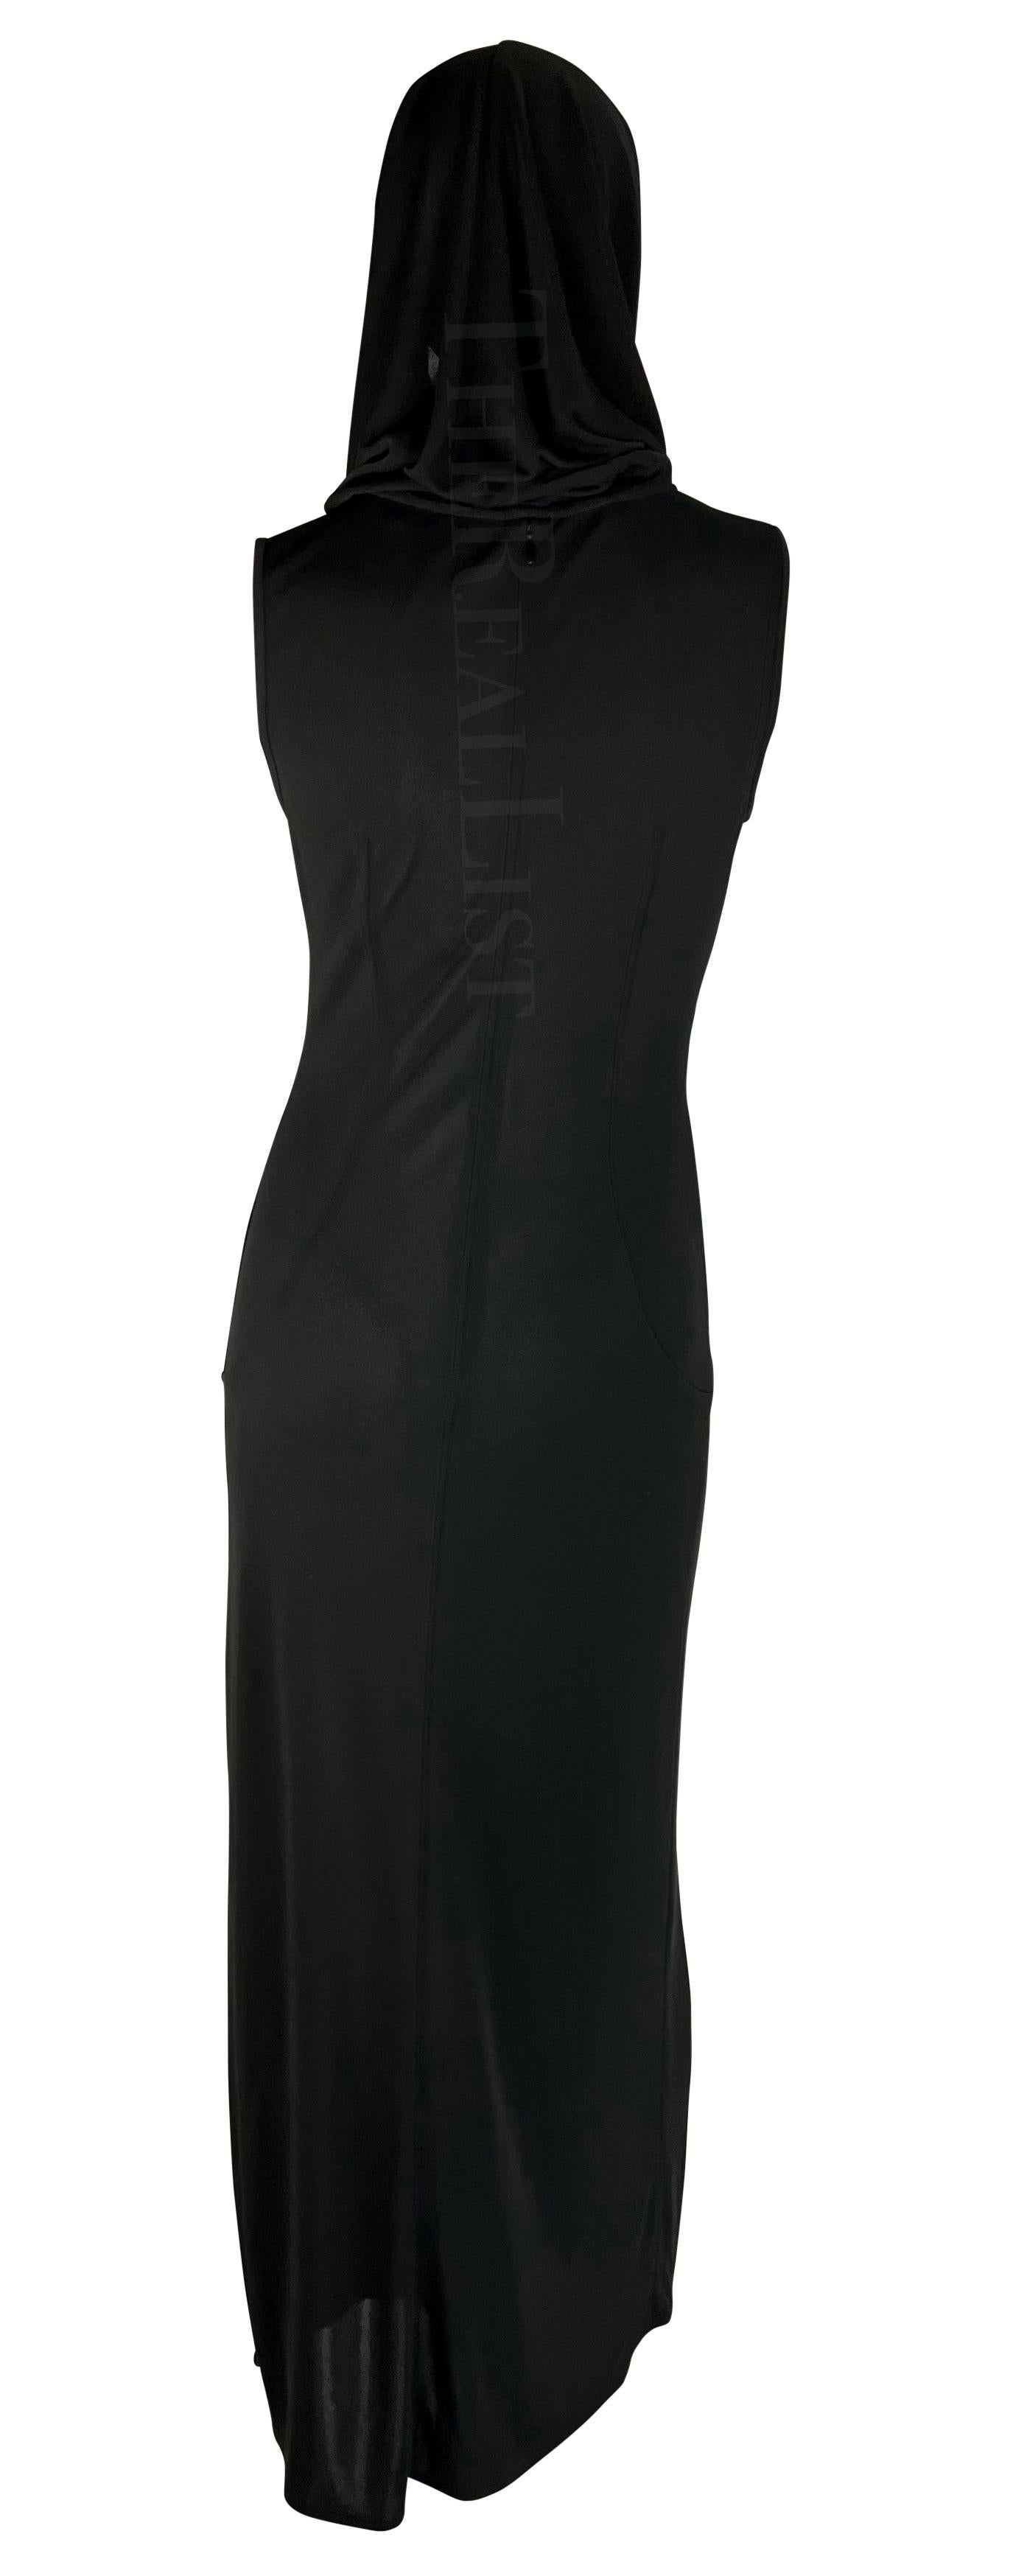 S/S 1996 Dolce & Gabbana Runway Hooded Stretch Black High Slit Dress For Sale 3